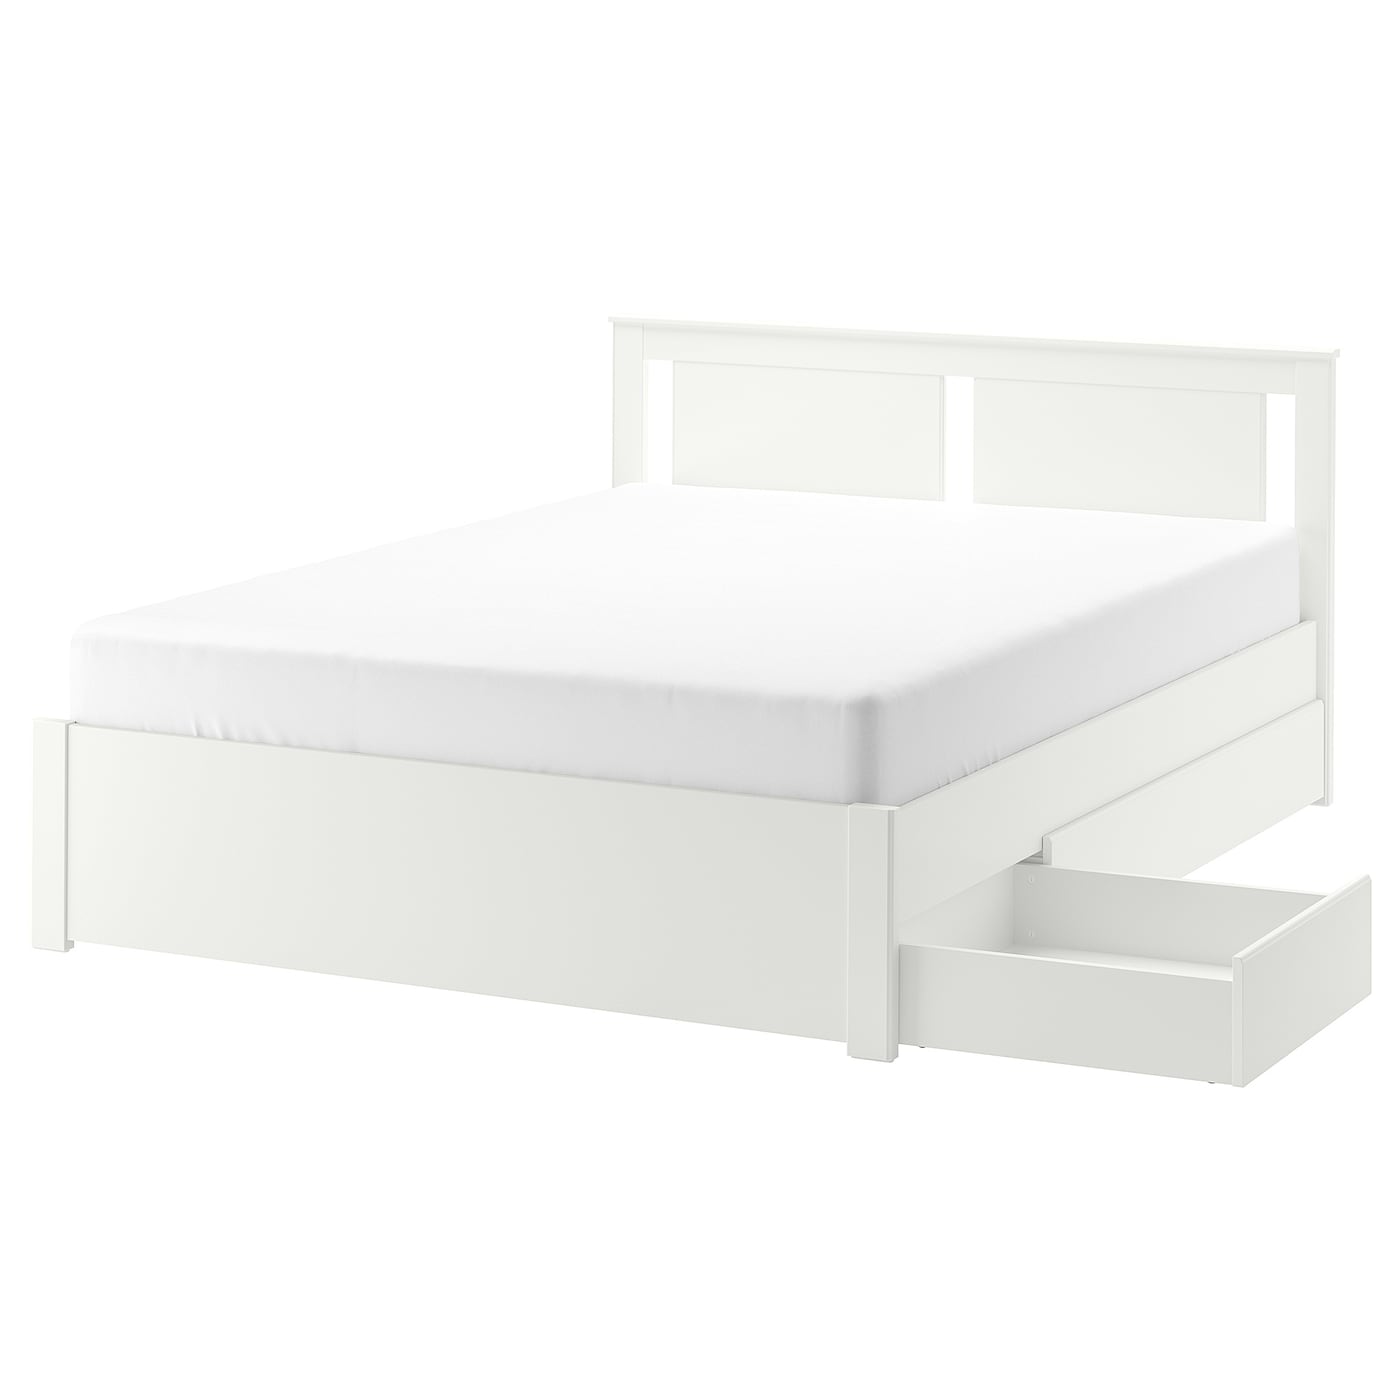 Каркас кровати с 2 ящиками для хранения - IKEA SONGESAND/LURÖY/LUROY, 200х140 см, белый, СОНГЕСАНД/ЛУРОЙ ИКЕА